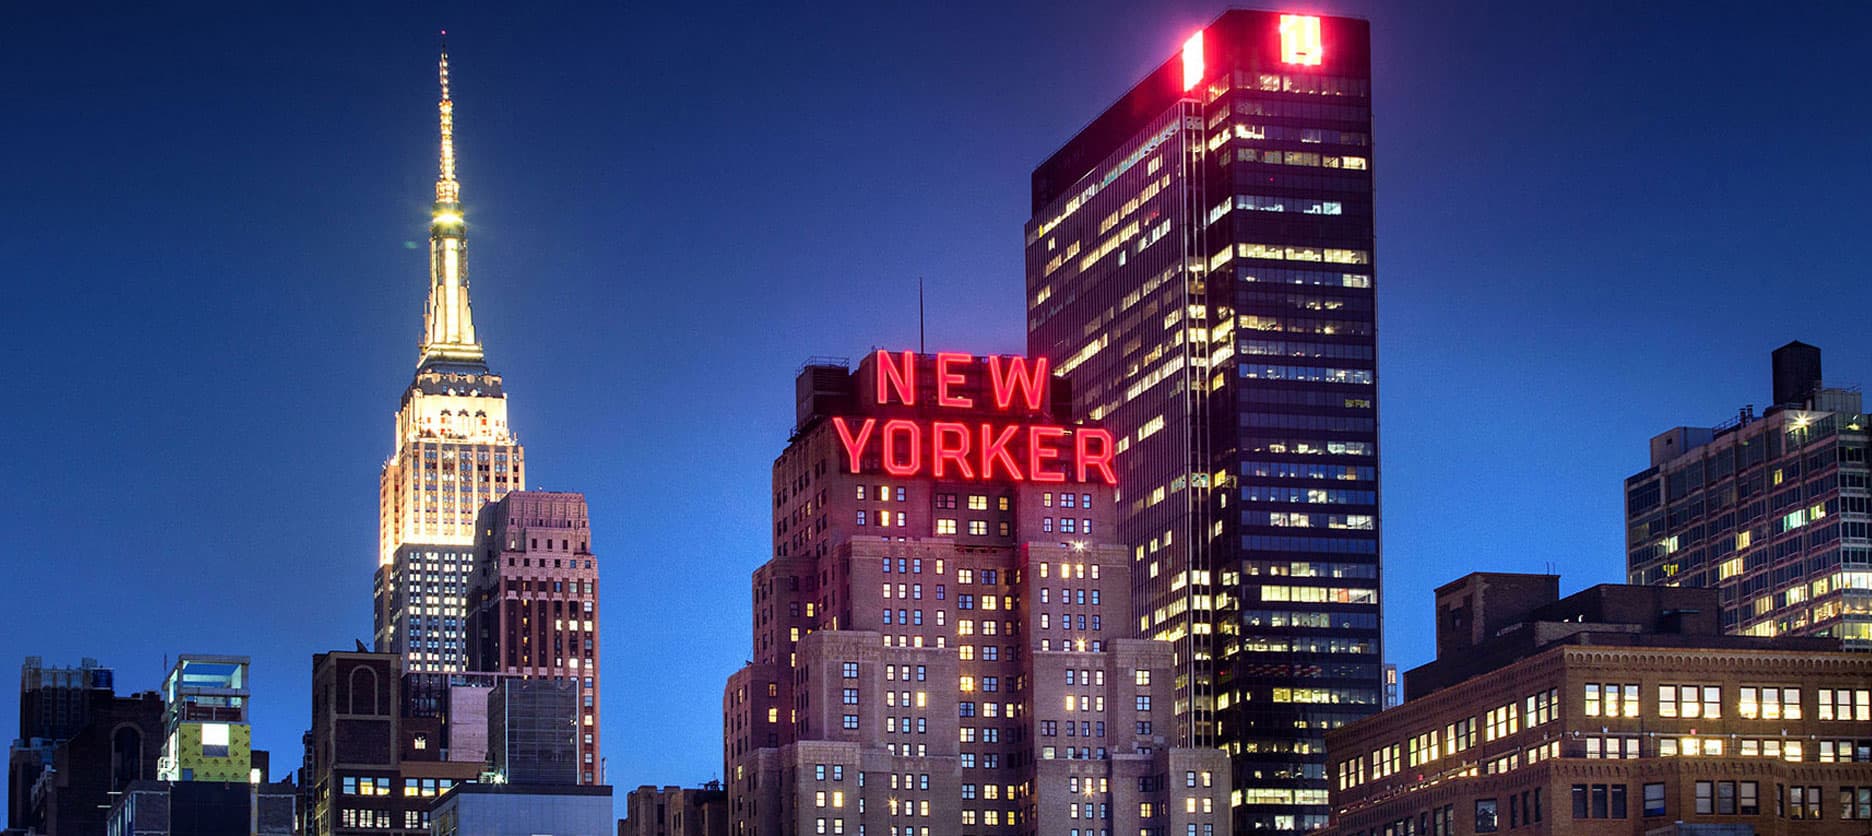 New Yorker Wyndham Hotel skyline